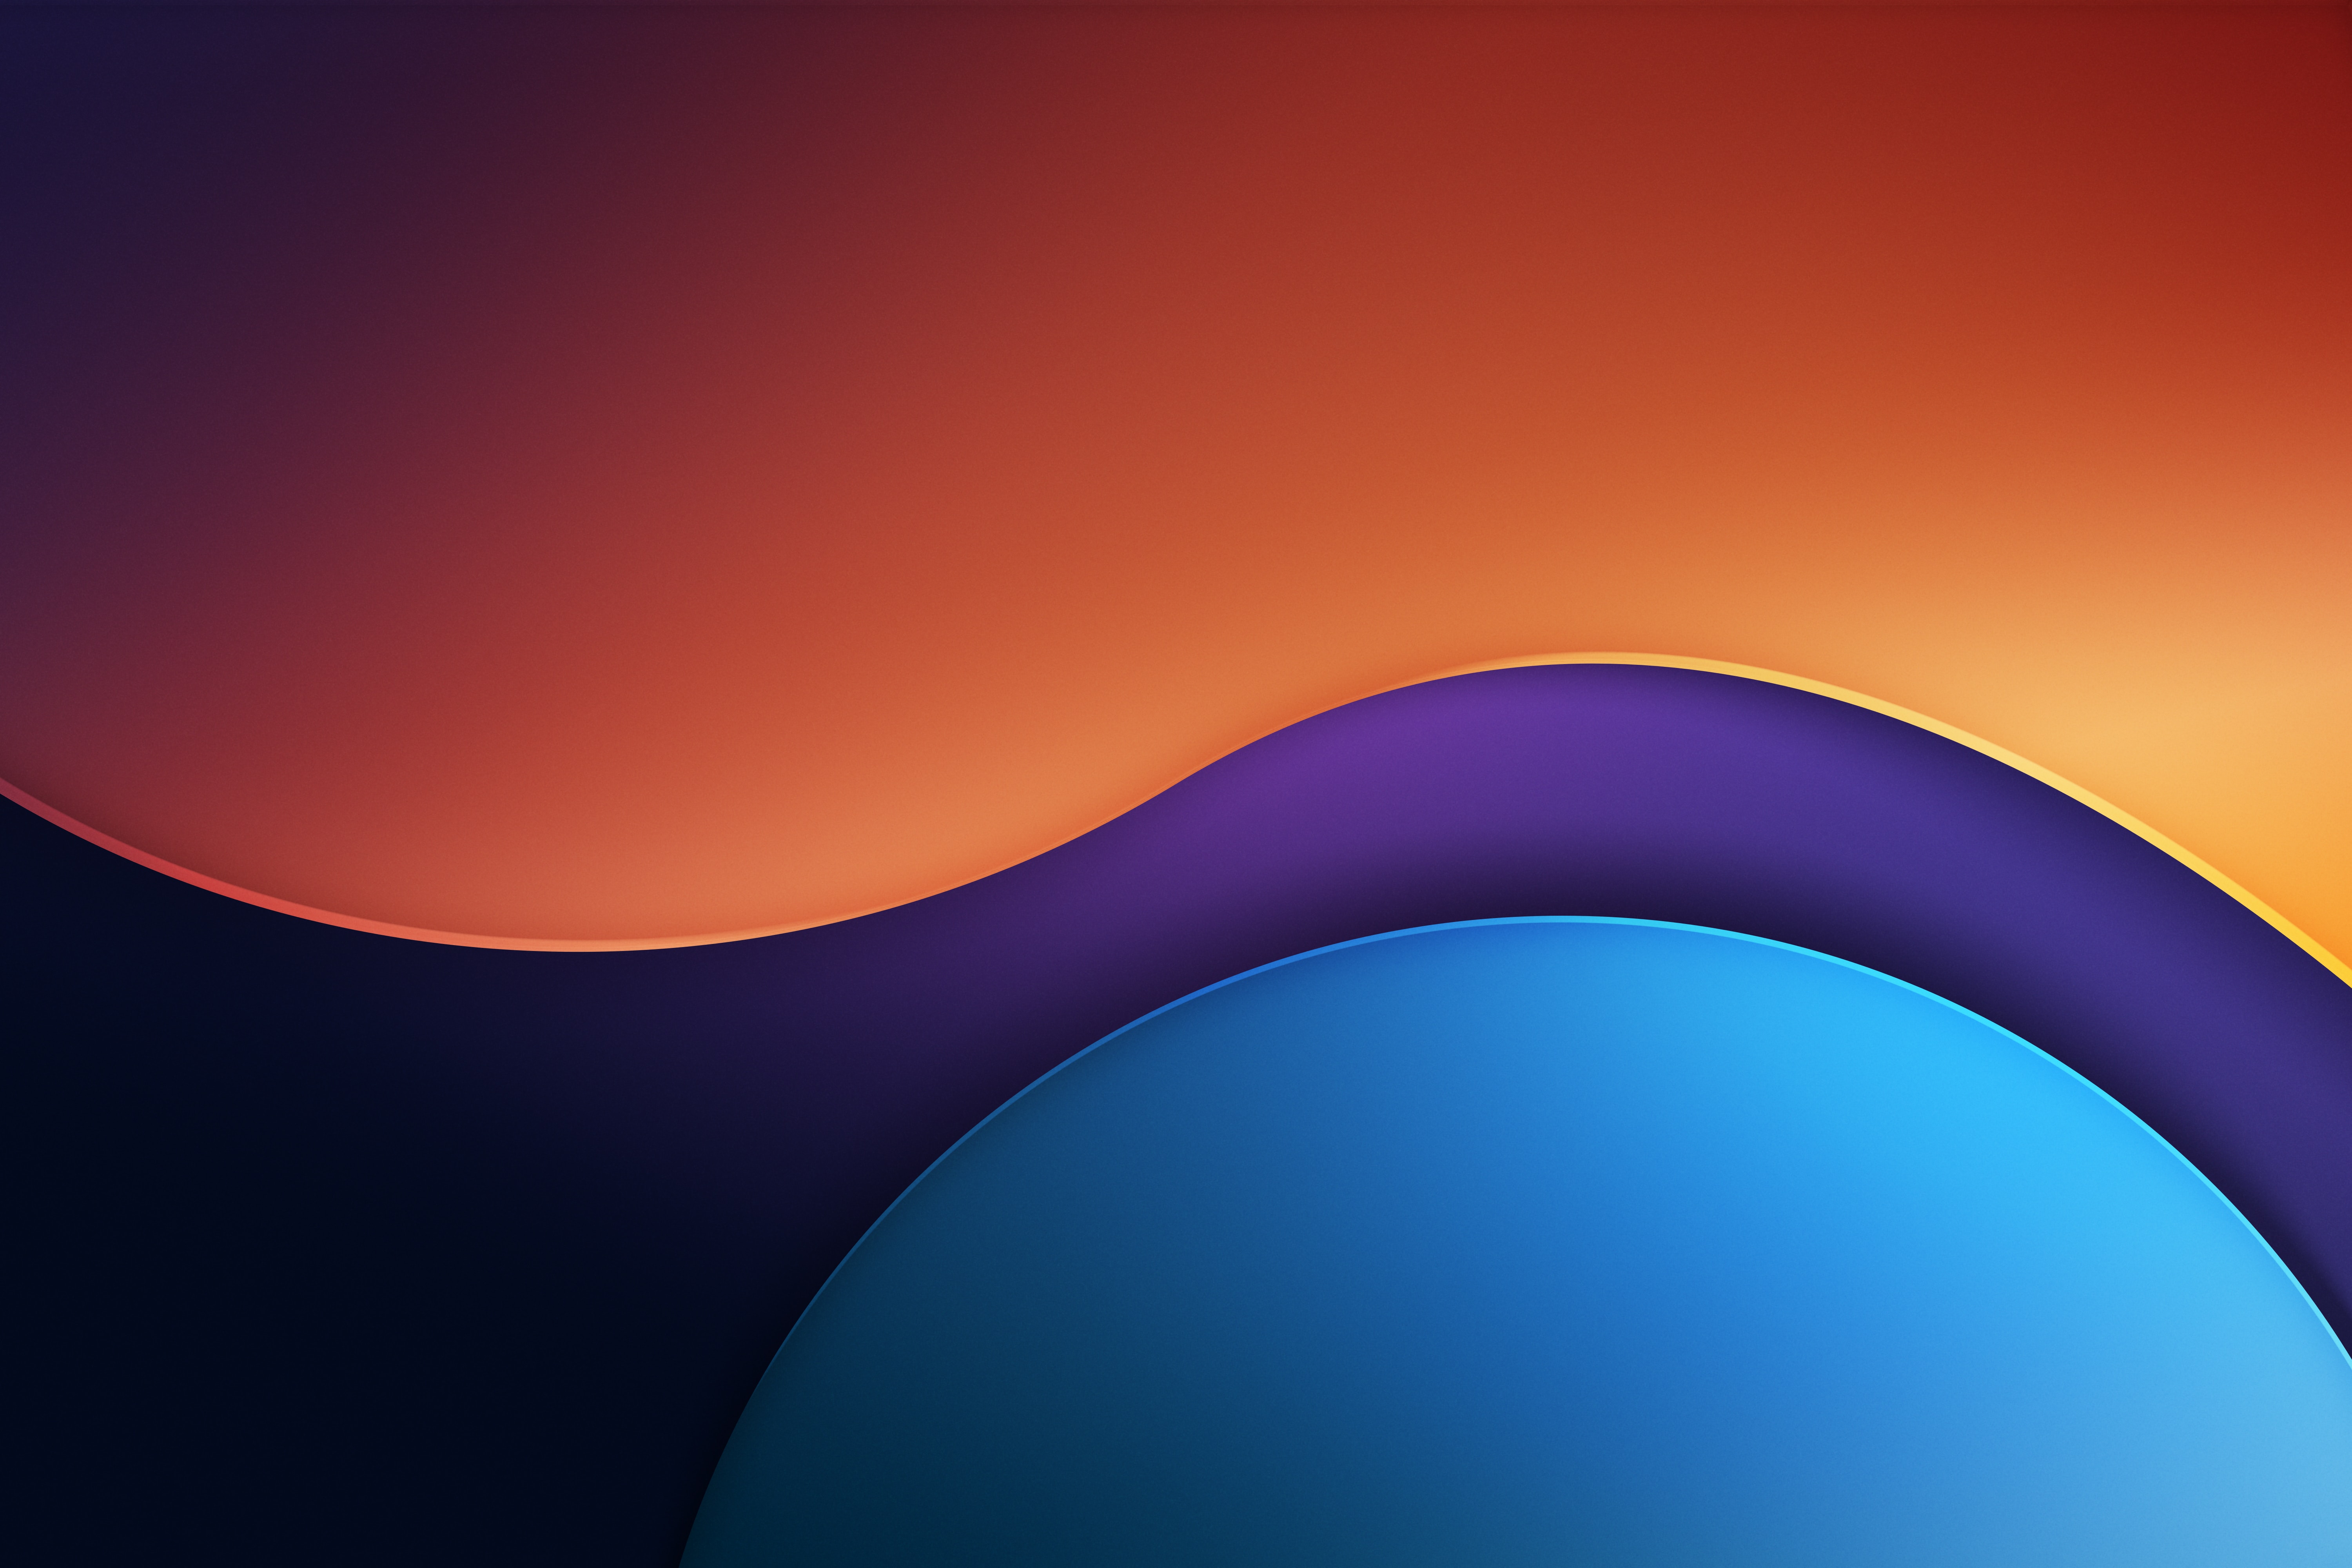 50 Beautiful Free iPad Wallpapers for your New Desktop - Tutorials